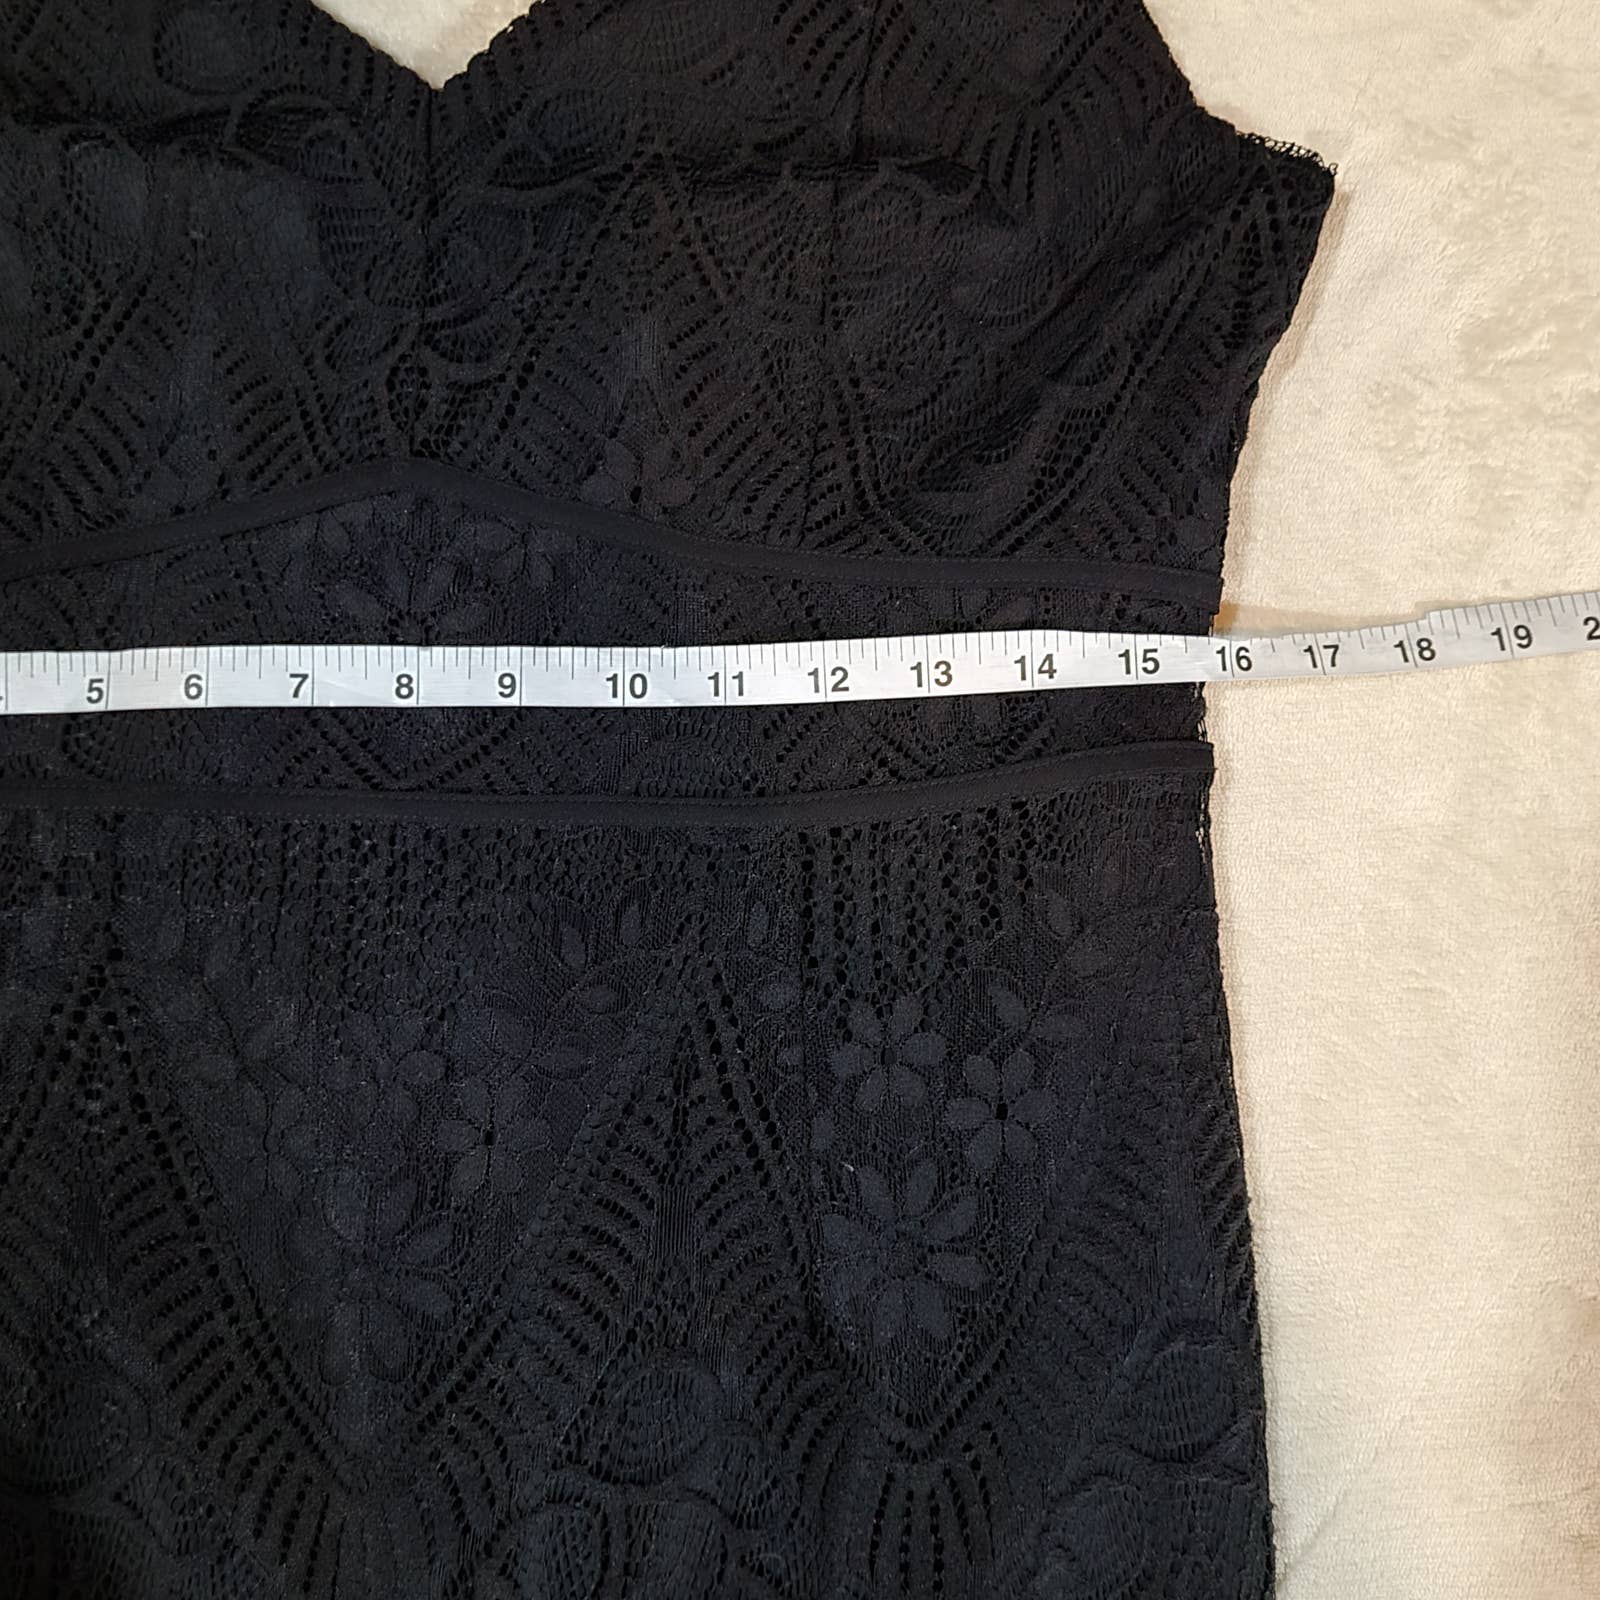 Nanette Lepore Black Lace Dress - Size 12Markita's ClosetNanette Lepore